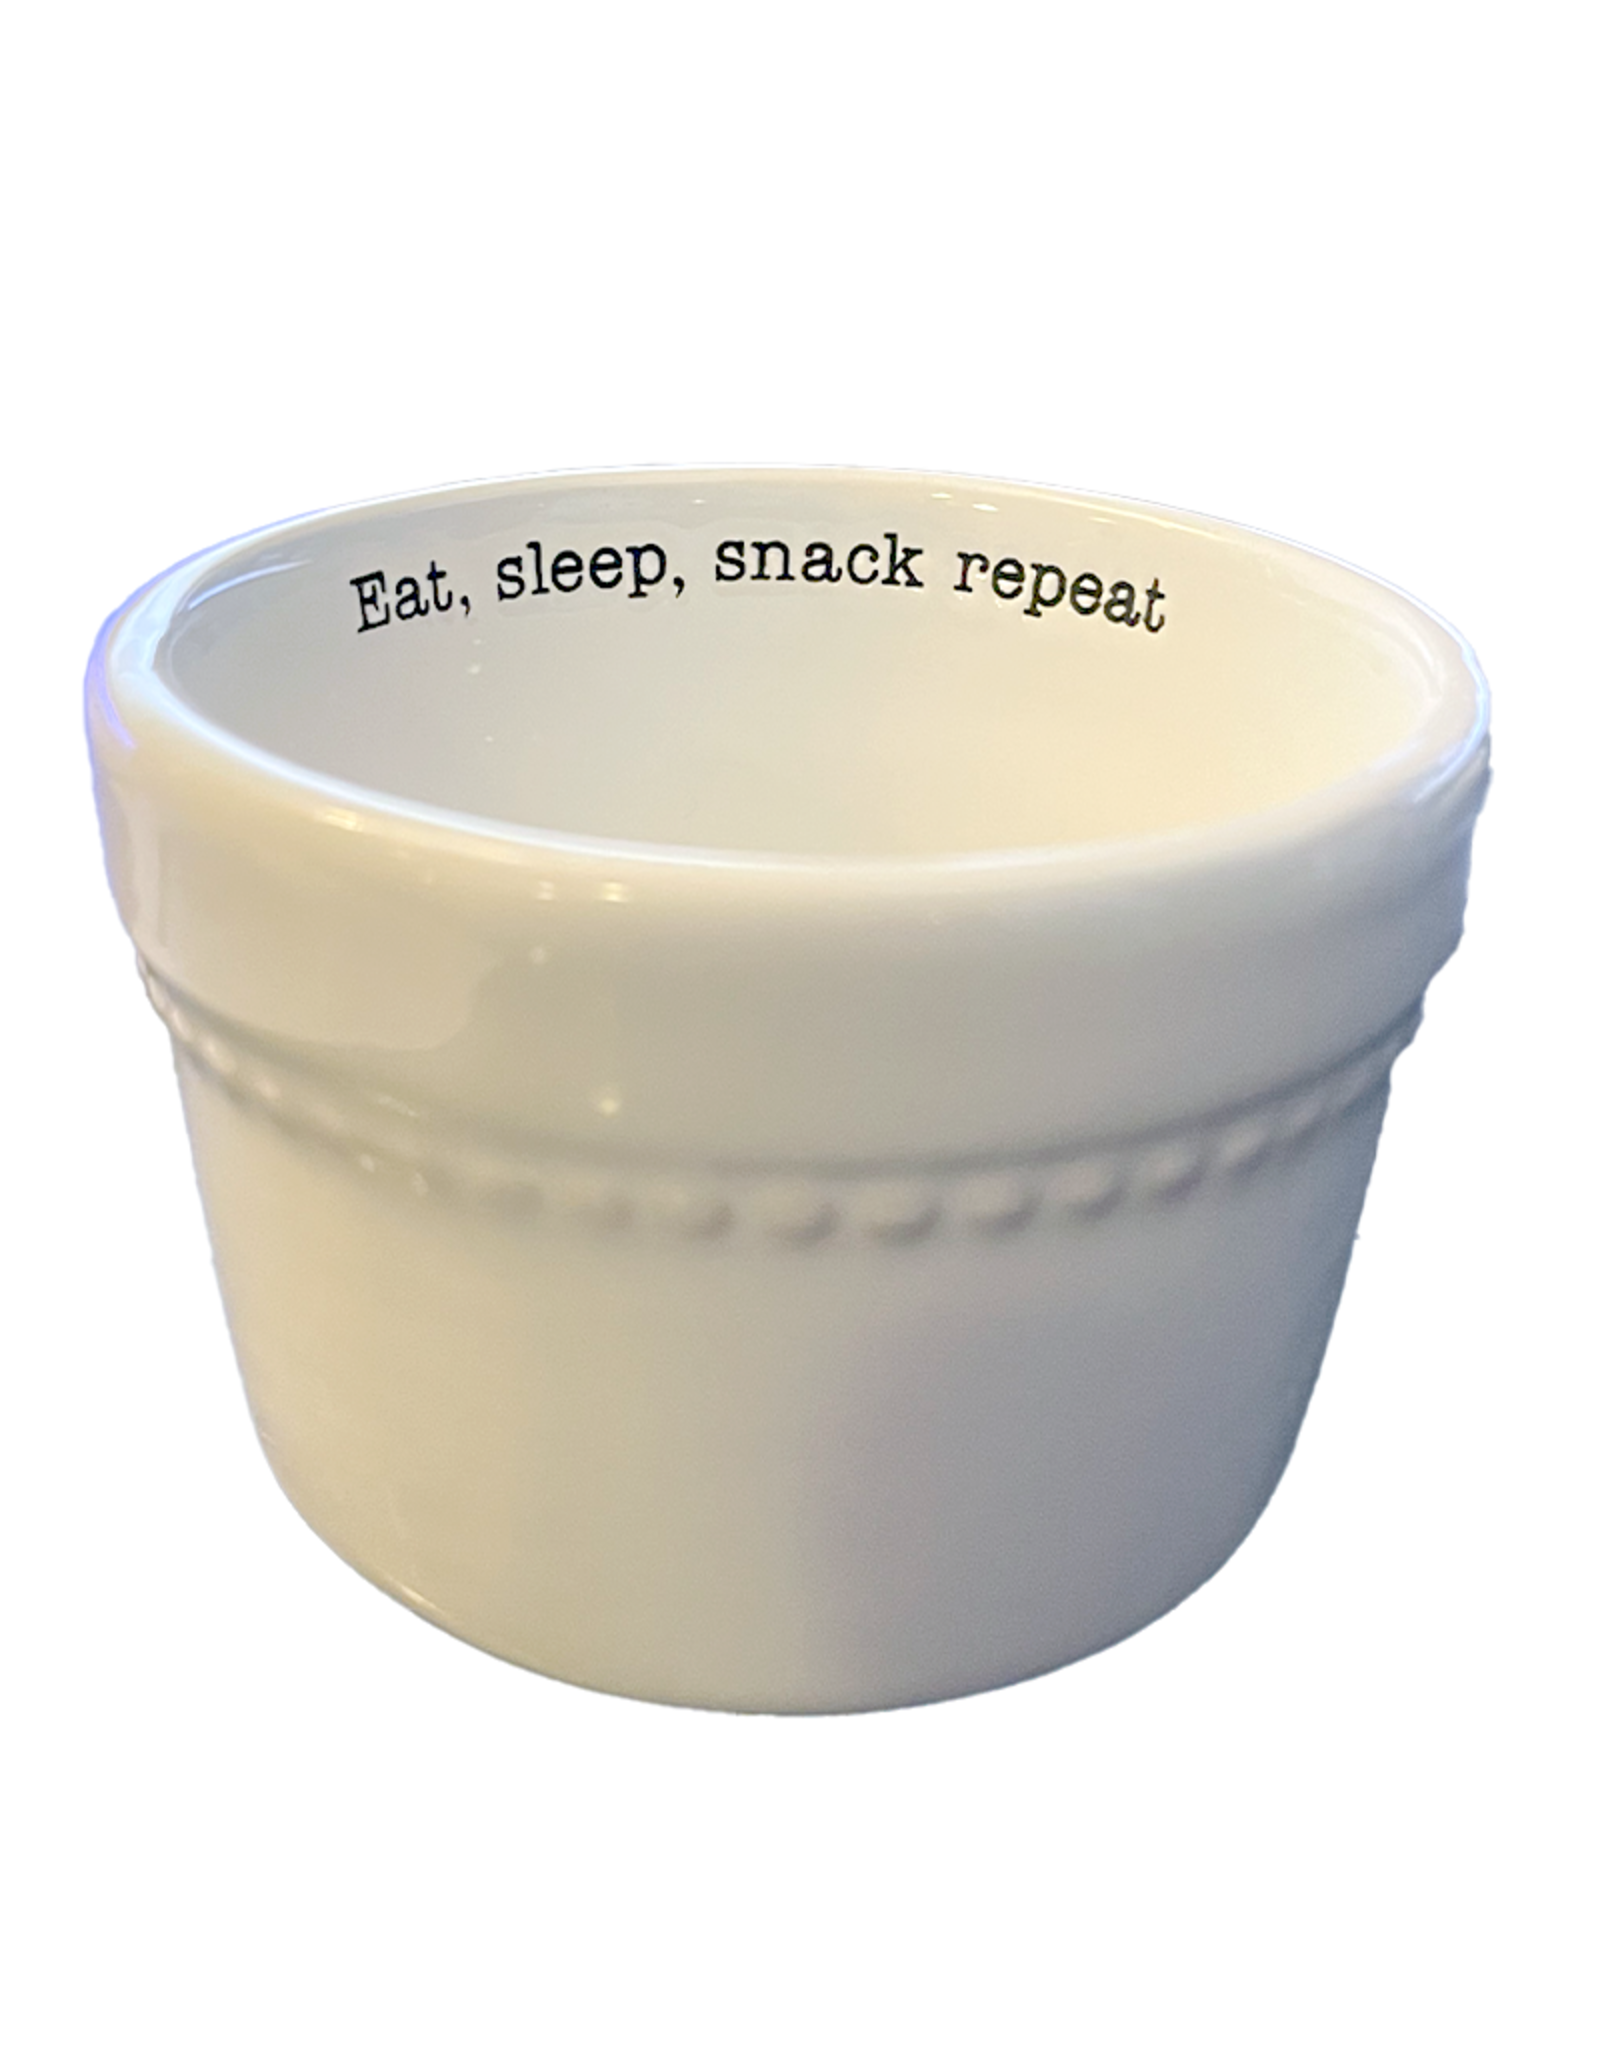 Mud Pie Ramekin 3 Inch Snack Bowl Dish | Eat Sleep Snack Repeat